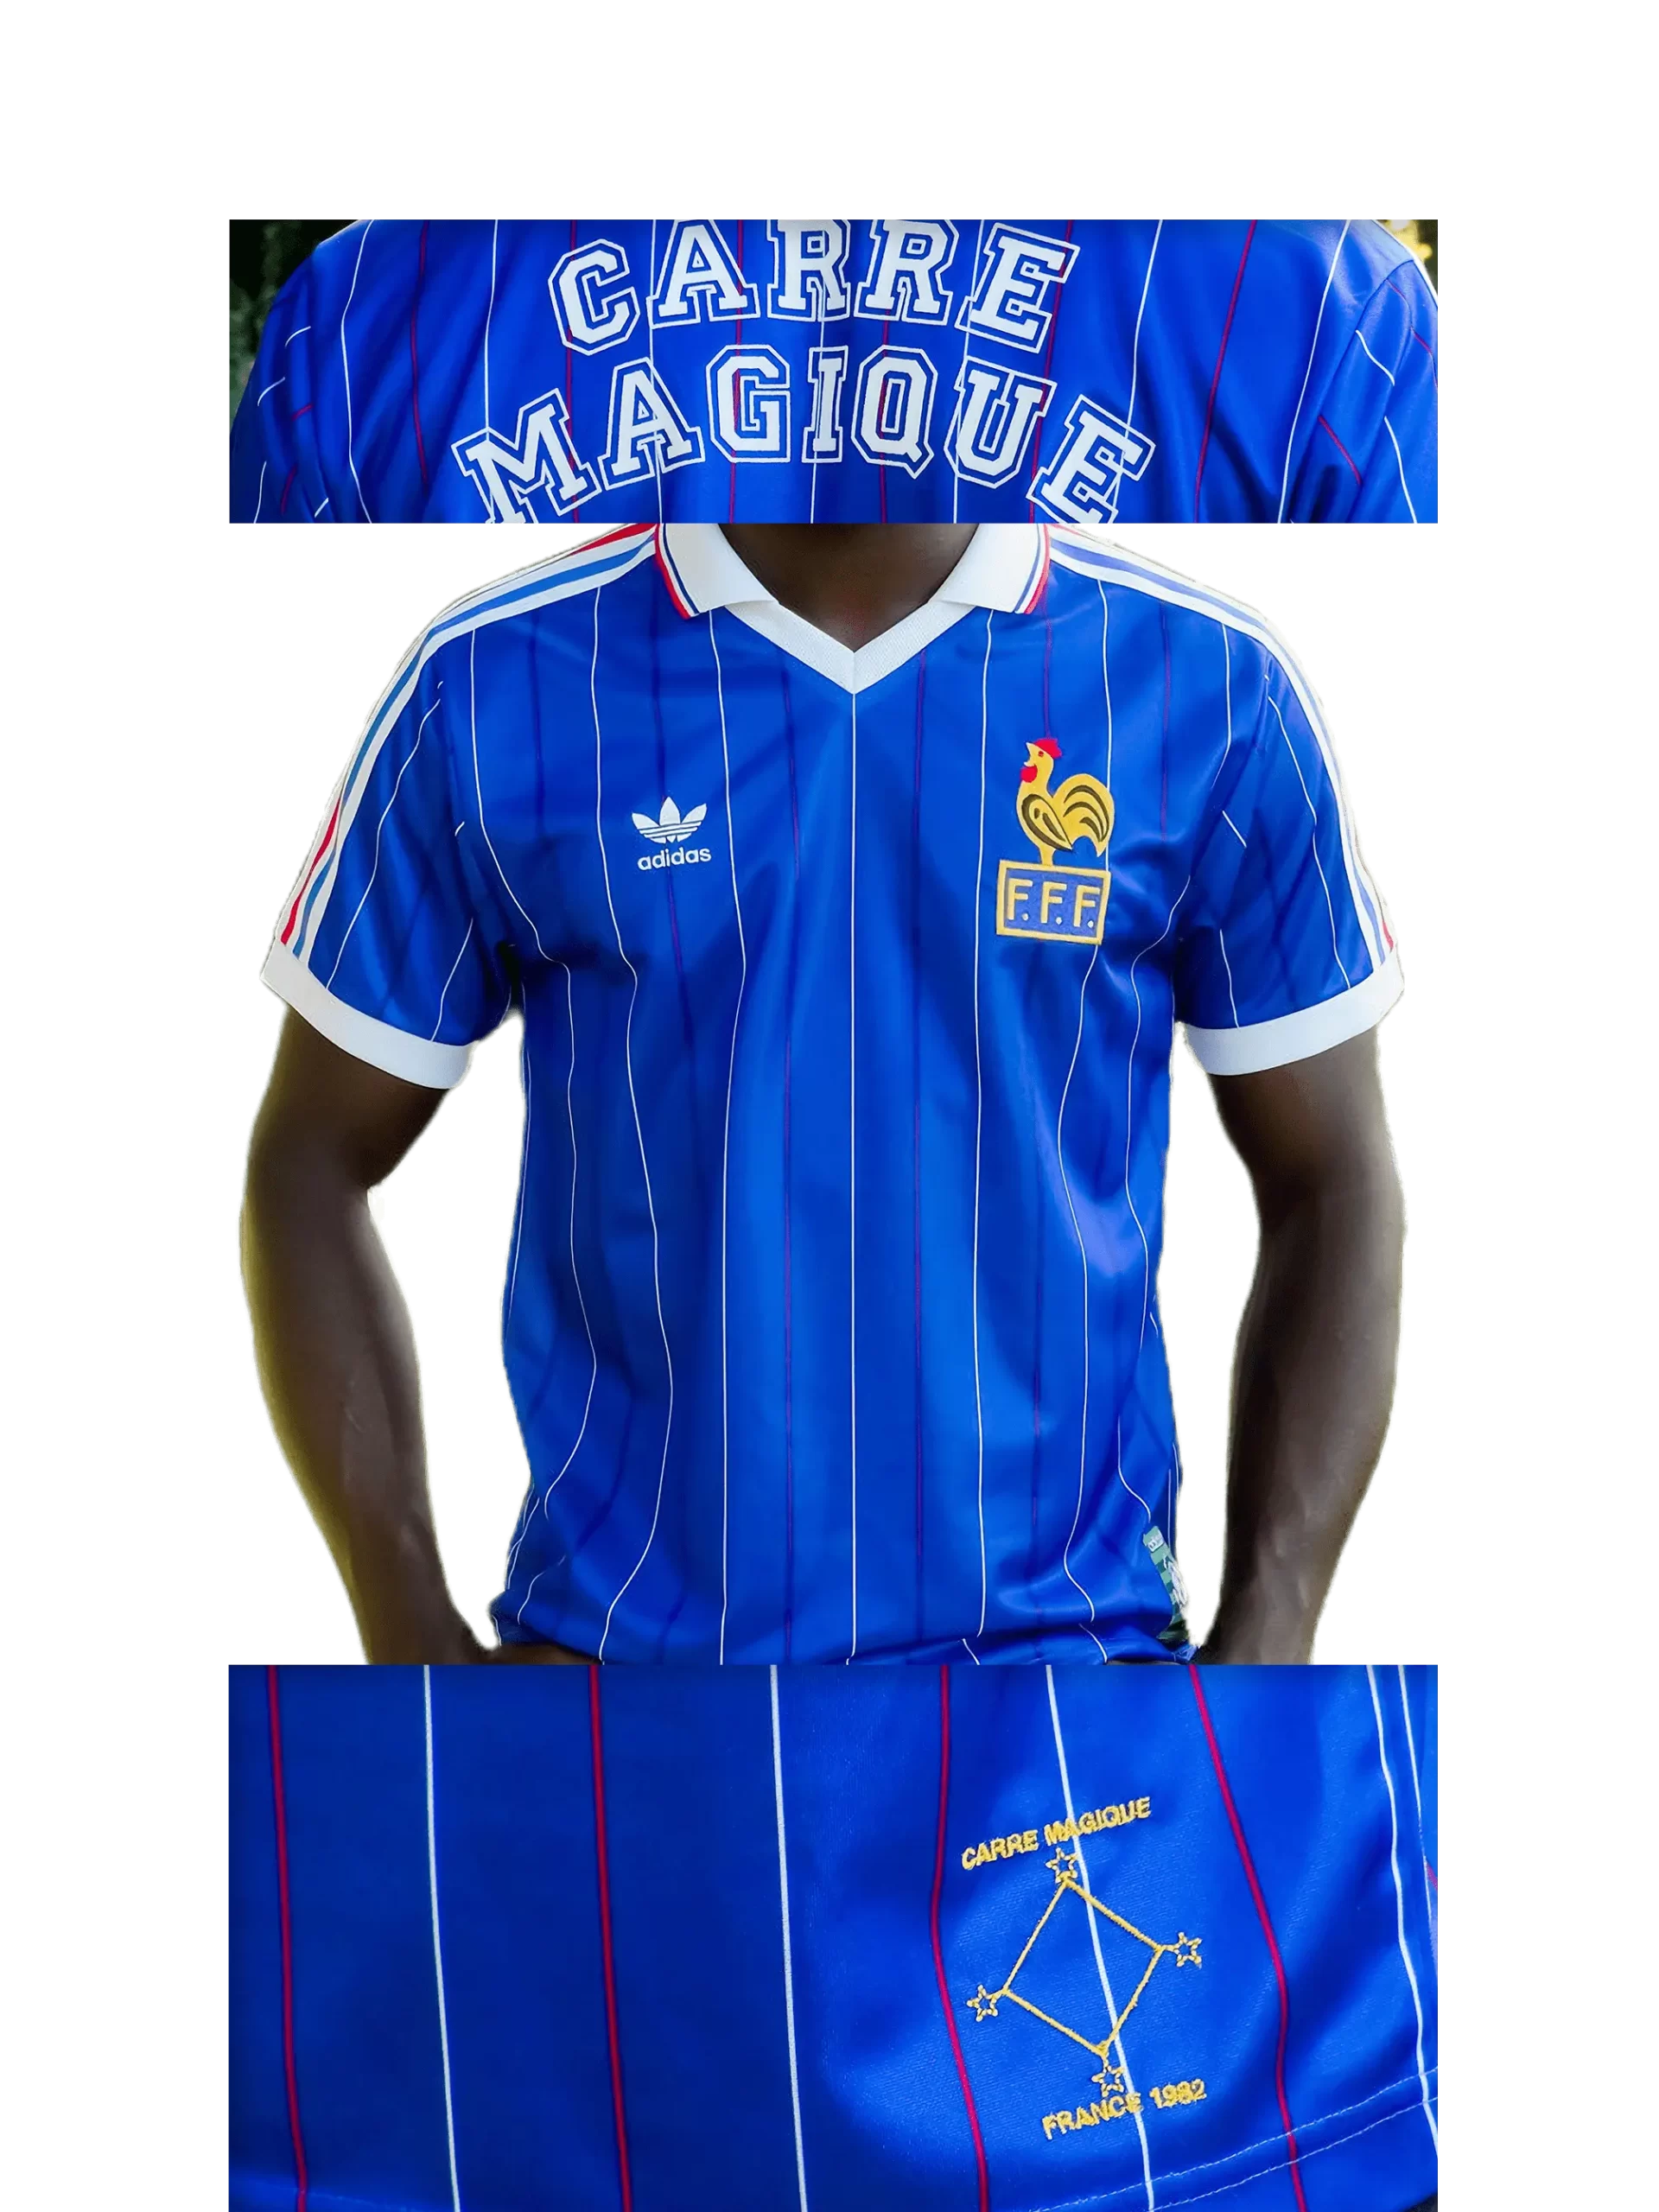 Men's 2005 France '82 Carre Magique Jersey by Adidas: Devoted (EnLawded.com file #lmchk56806ip2y123320kg9st)